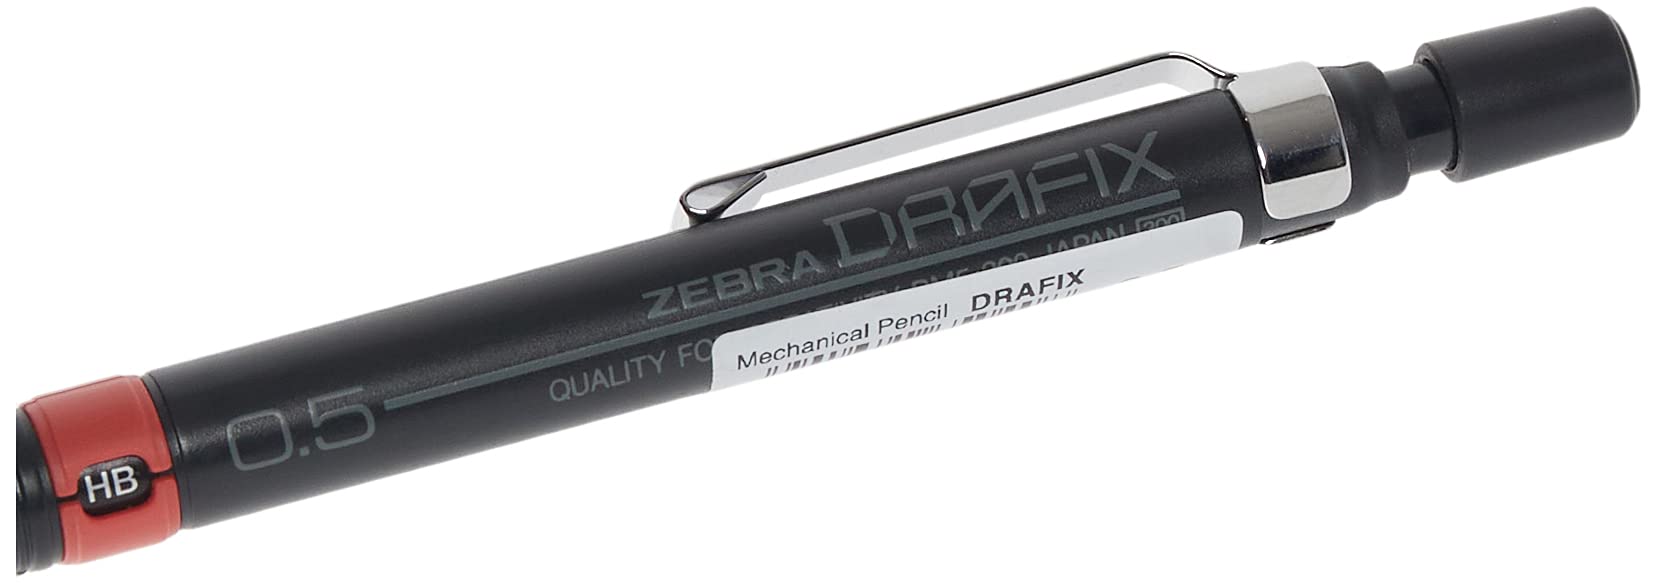 Zebra 0.5 公釐自動鉛筆 Dm3-300 書寫流暢